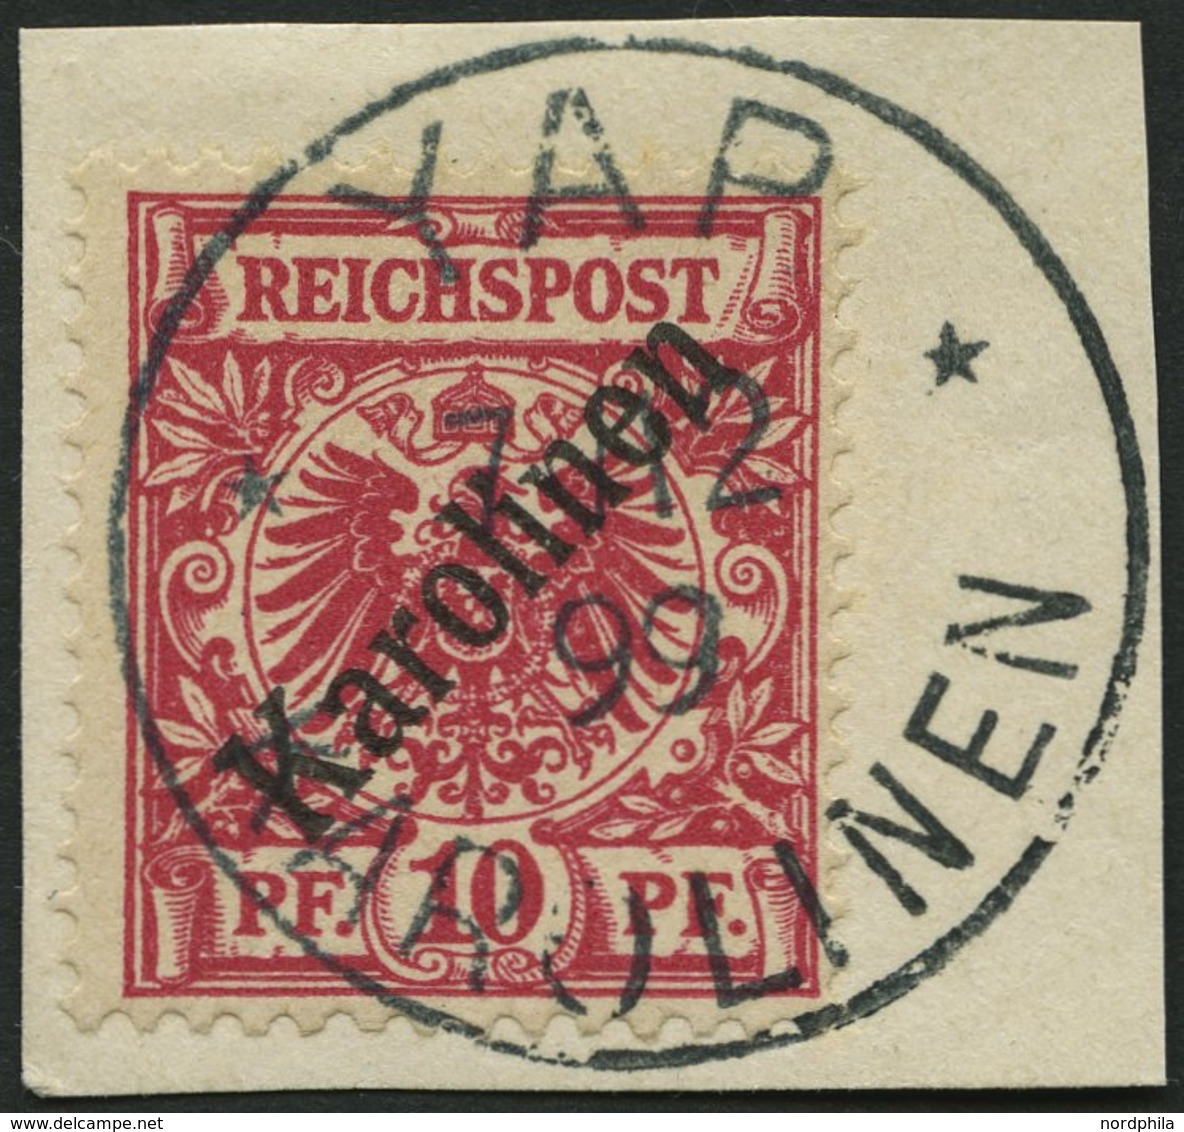 KAROLINEN 3I BrfStk, 1899, 10 Pf. Diagonaler Aufdruck, Stempel YAP, Prachtbriefstück, Mi. (160.-) - Karolinen